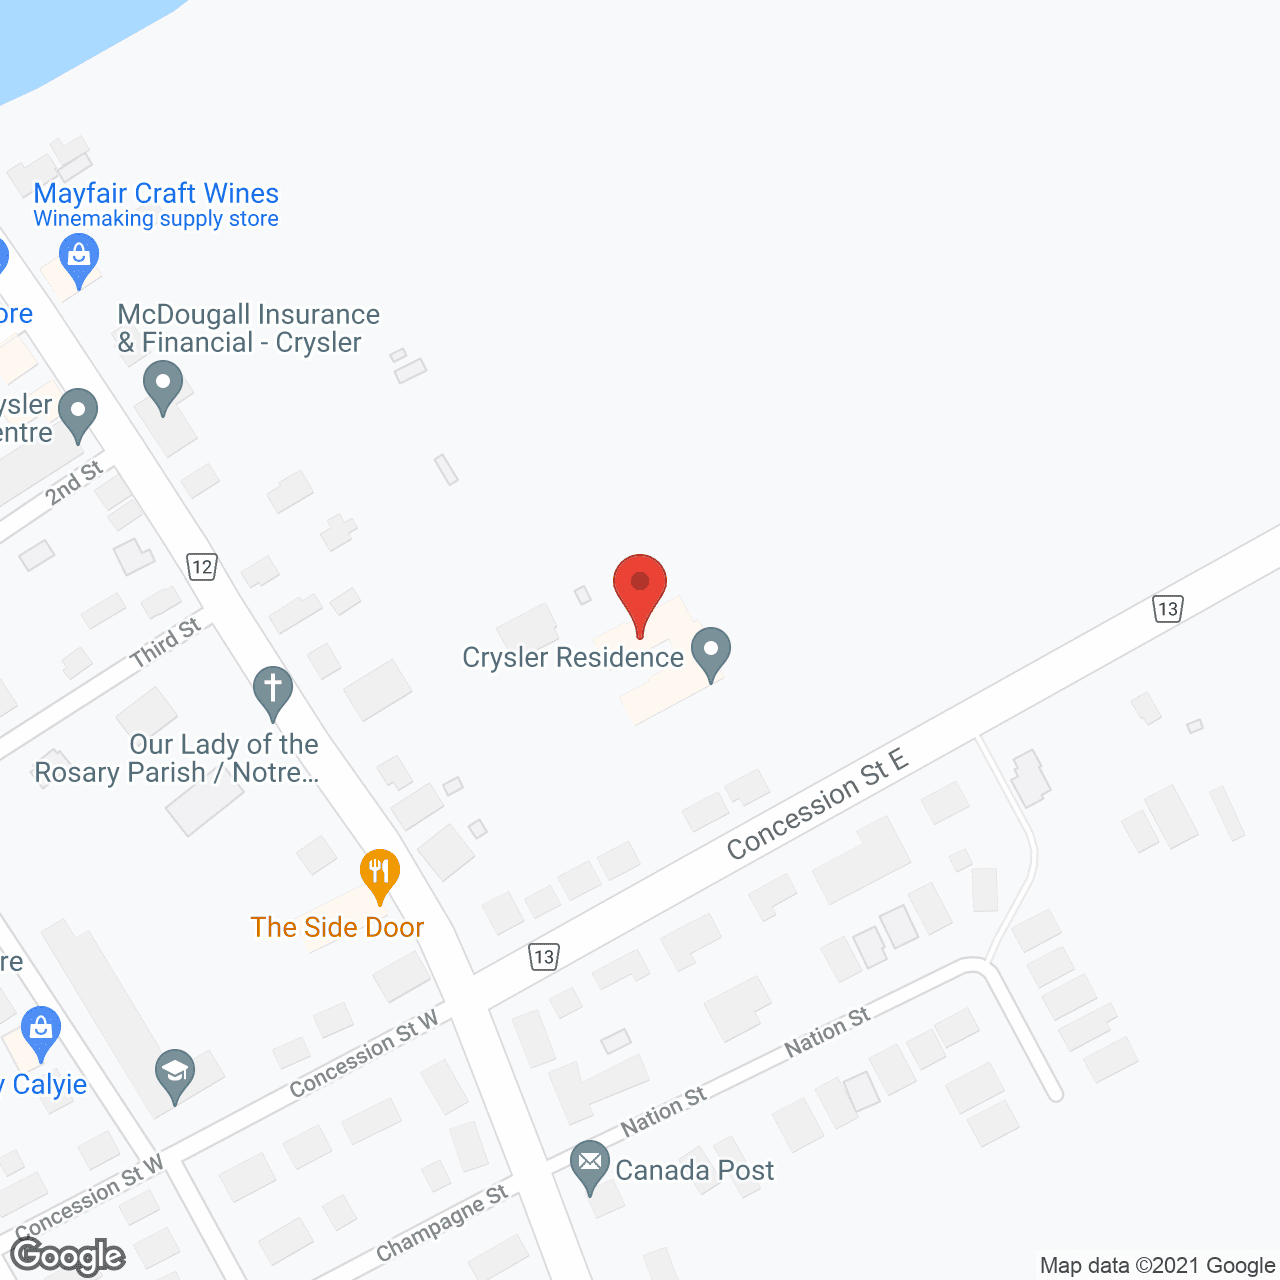 Crysler Residence in google map